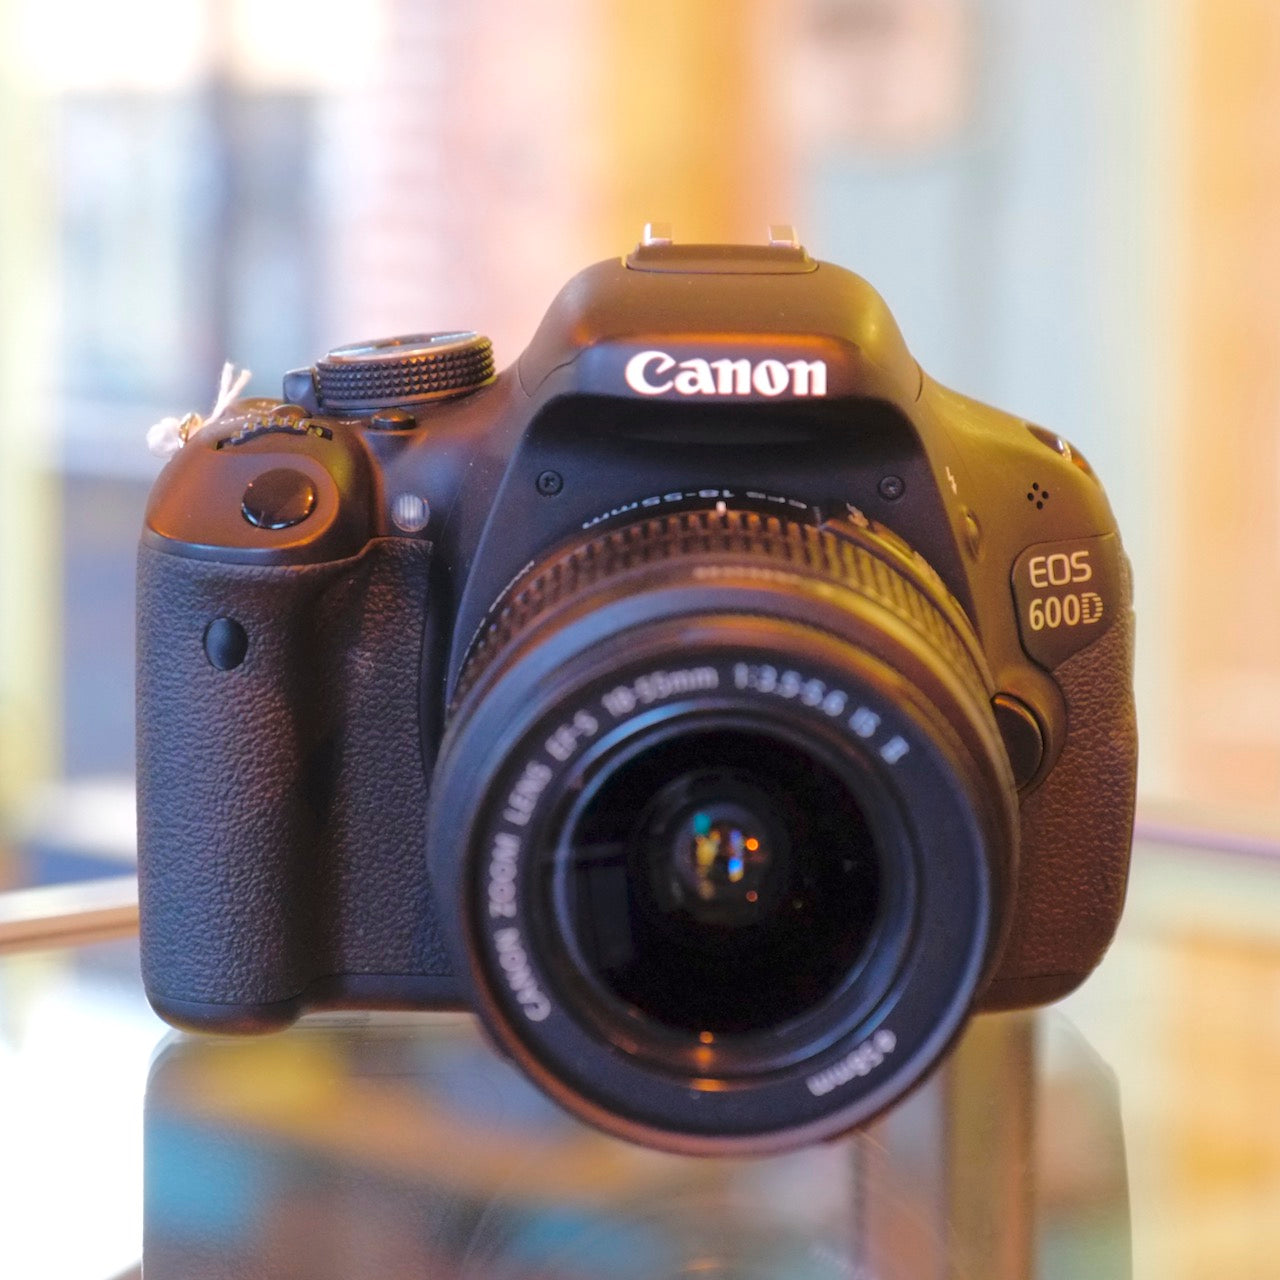 Canon EOS 600D (AKA Rebel T3i)